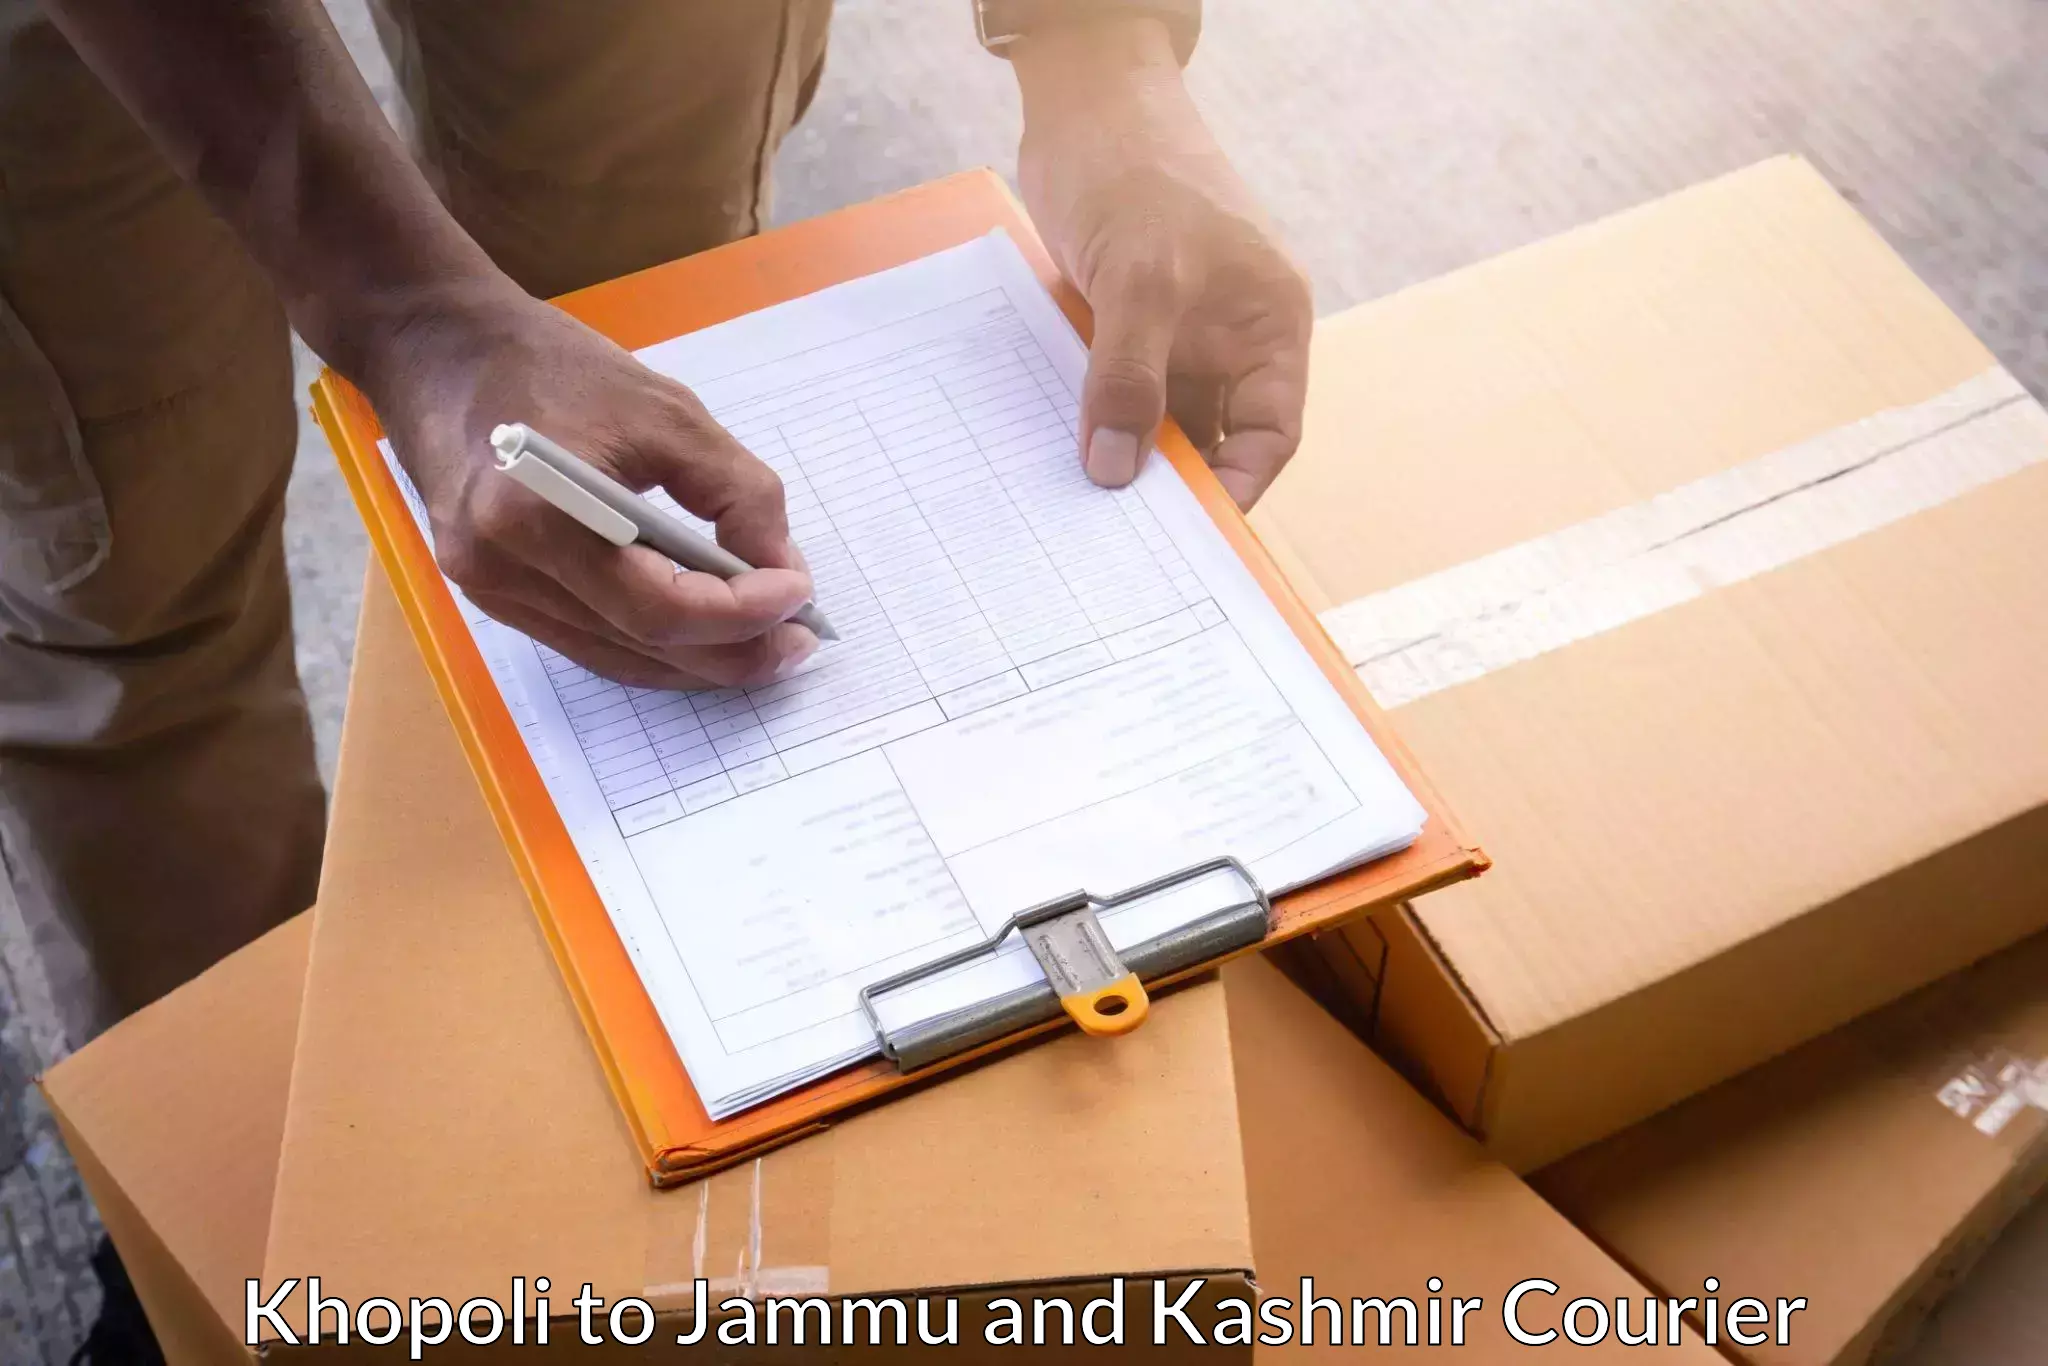 Professional courier handling Khopoli to Jammu and Kashmir